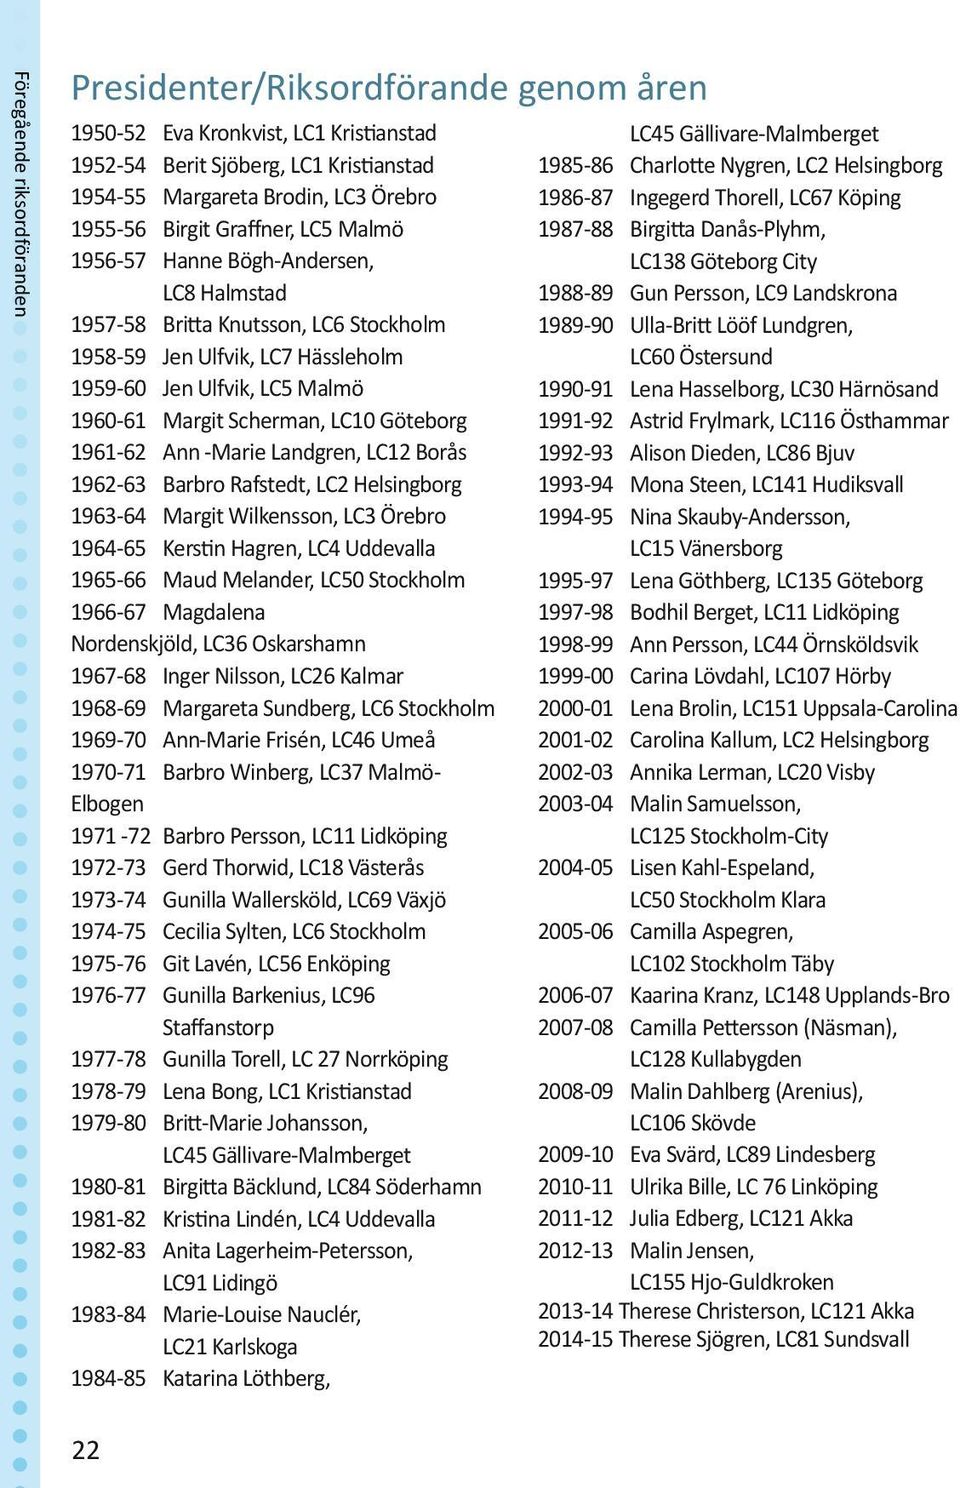 Göteborg 1961-62 Ann -Marie Landgren, LC12 Borås 1962-63 Barbro Rafstedt, LC2 Helsingborg 1963-64 Margit Wilkensson, LC3 Örebro 1964-65 Kerstin Hagren, LC4 Uddevalla 1965-66 Maud Melander, LC50